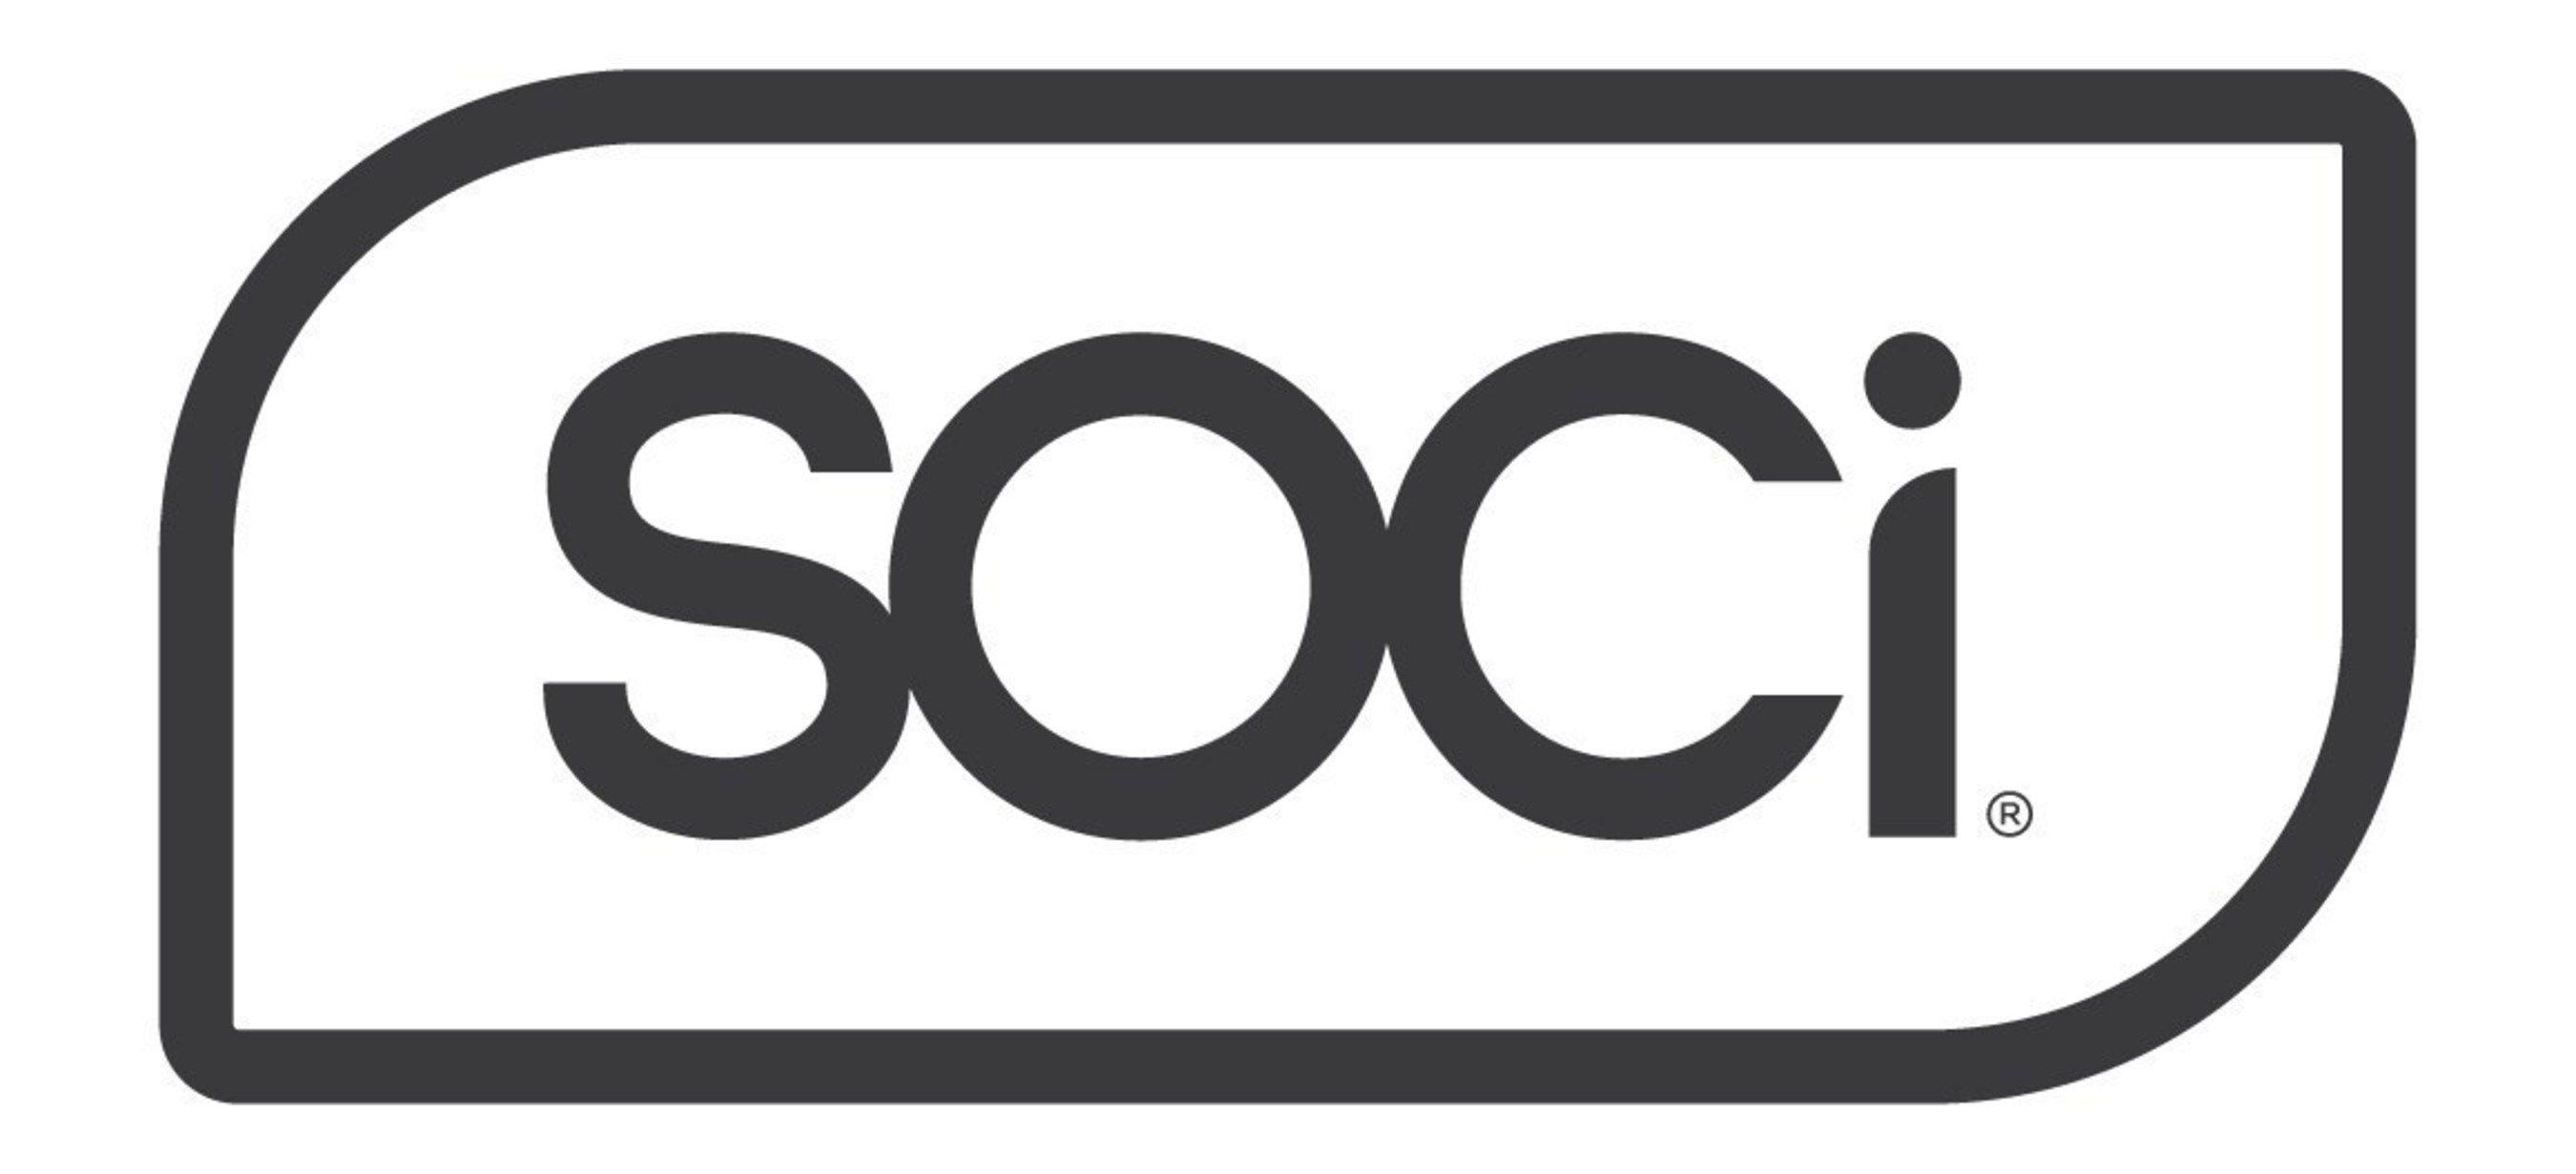 InternetBrands Logo - Internet Brands Chooses SOCi to Scale its Social Media Management